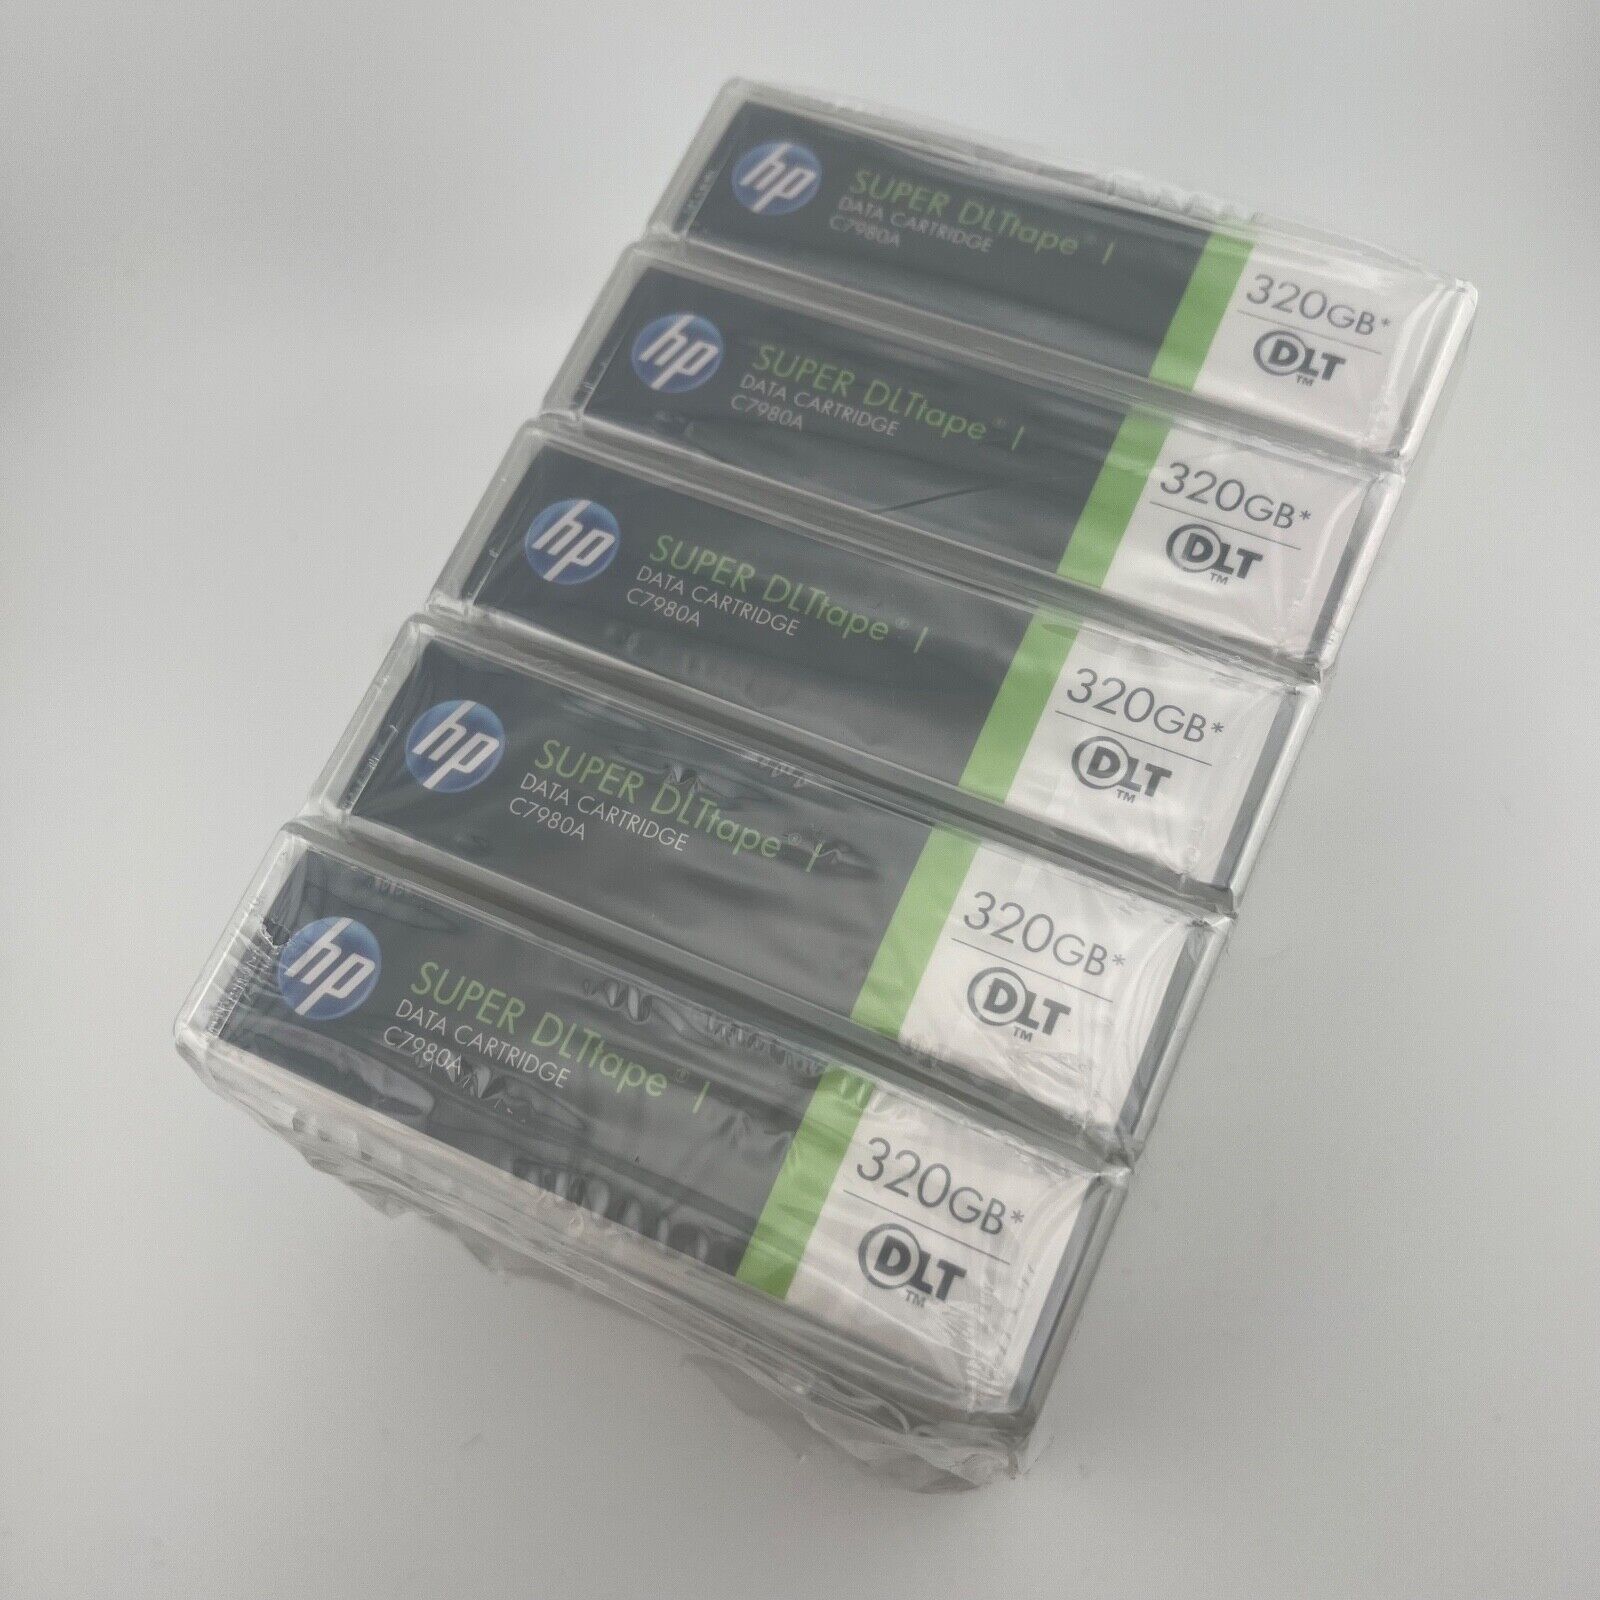 5 Pack Lot NEW SEALED Genuine HP 320GB Super DLT Tape Data Cartridge C7980A